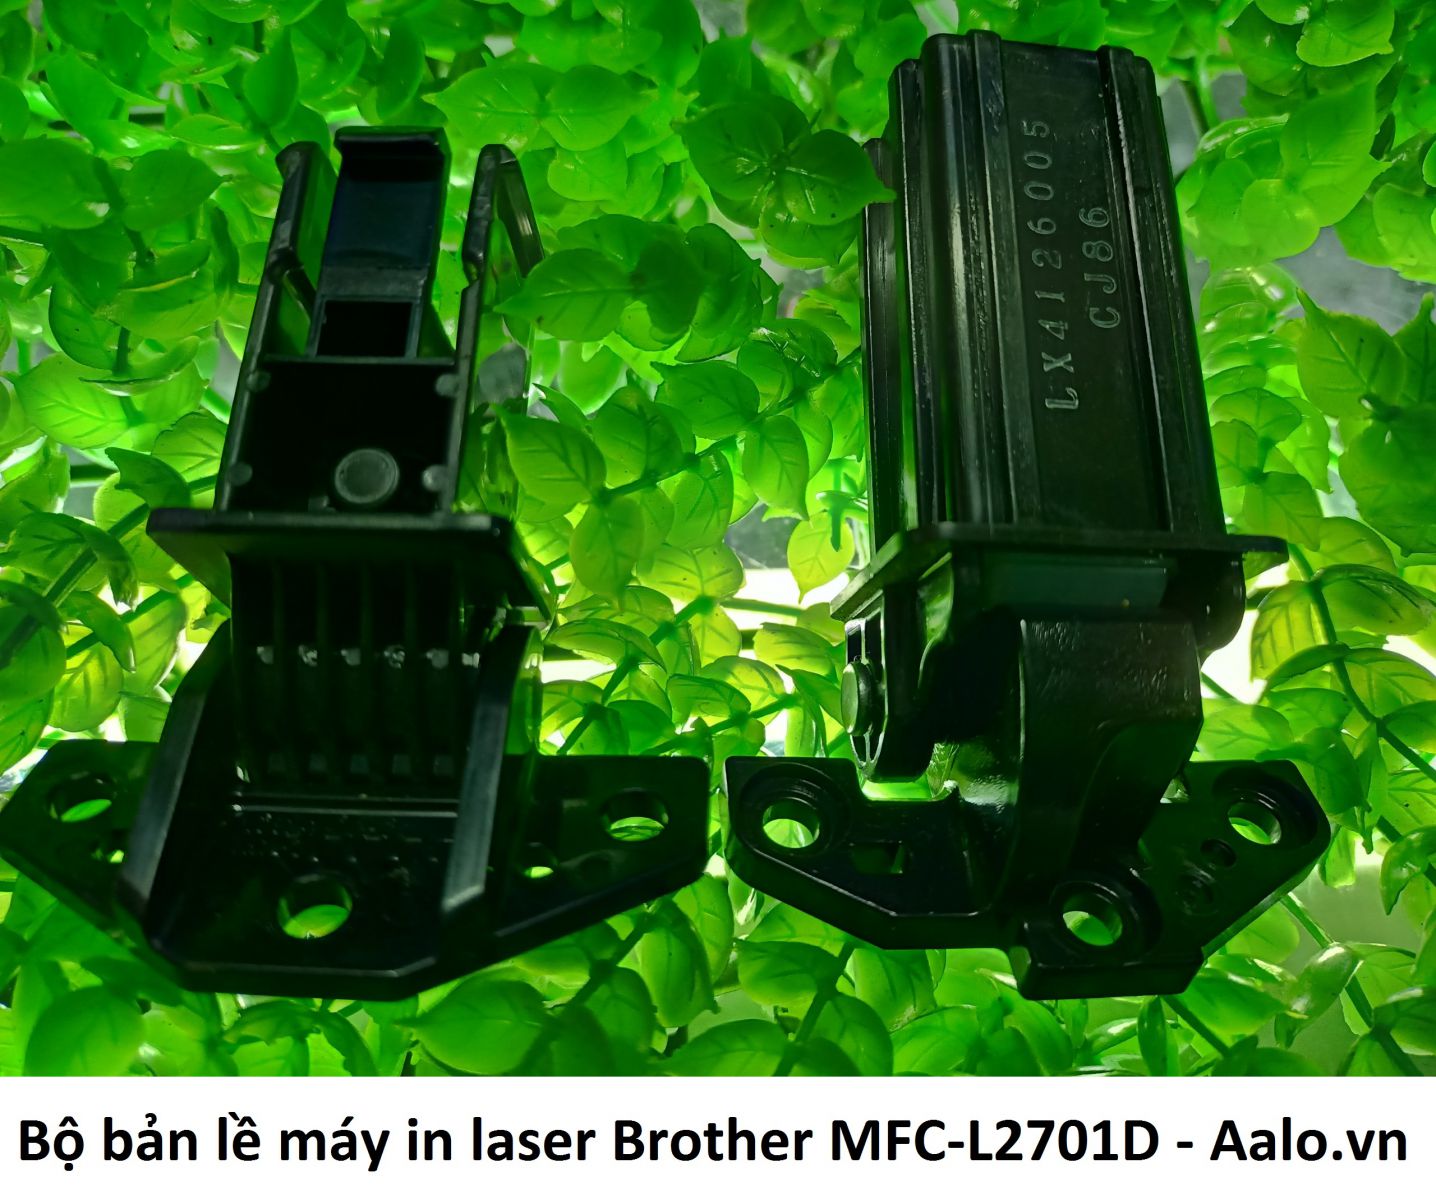 Bộ bản lề máy in laser Brother MFC-L2701D - Aalo.vn